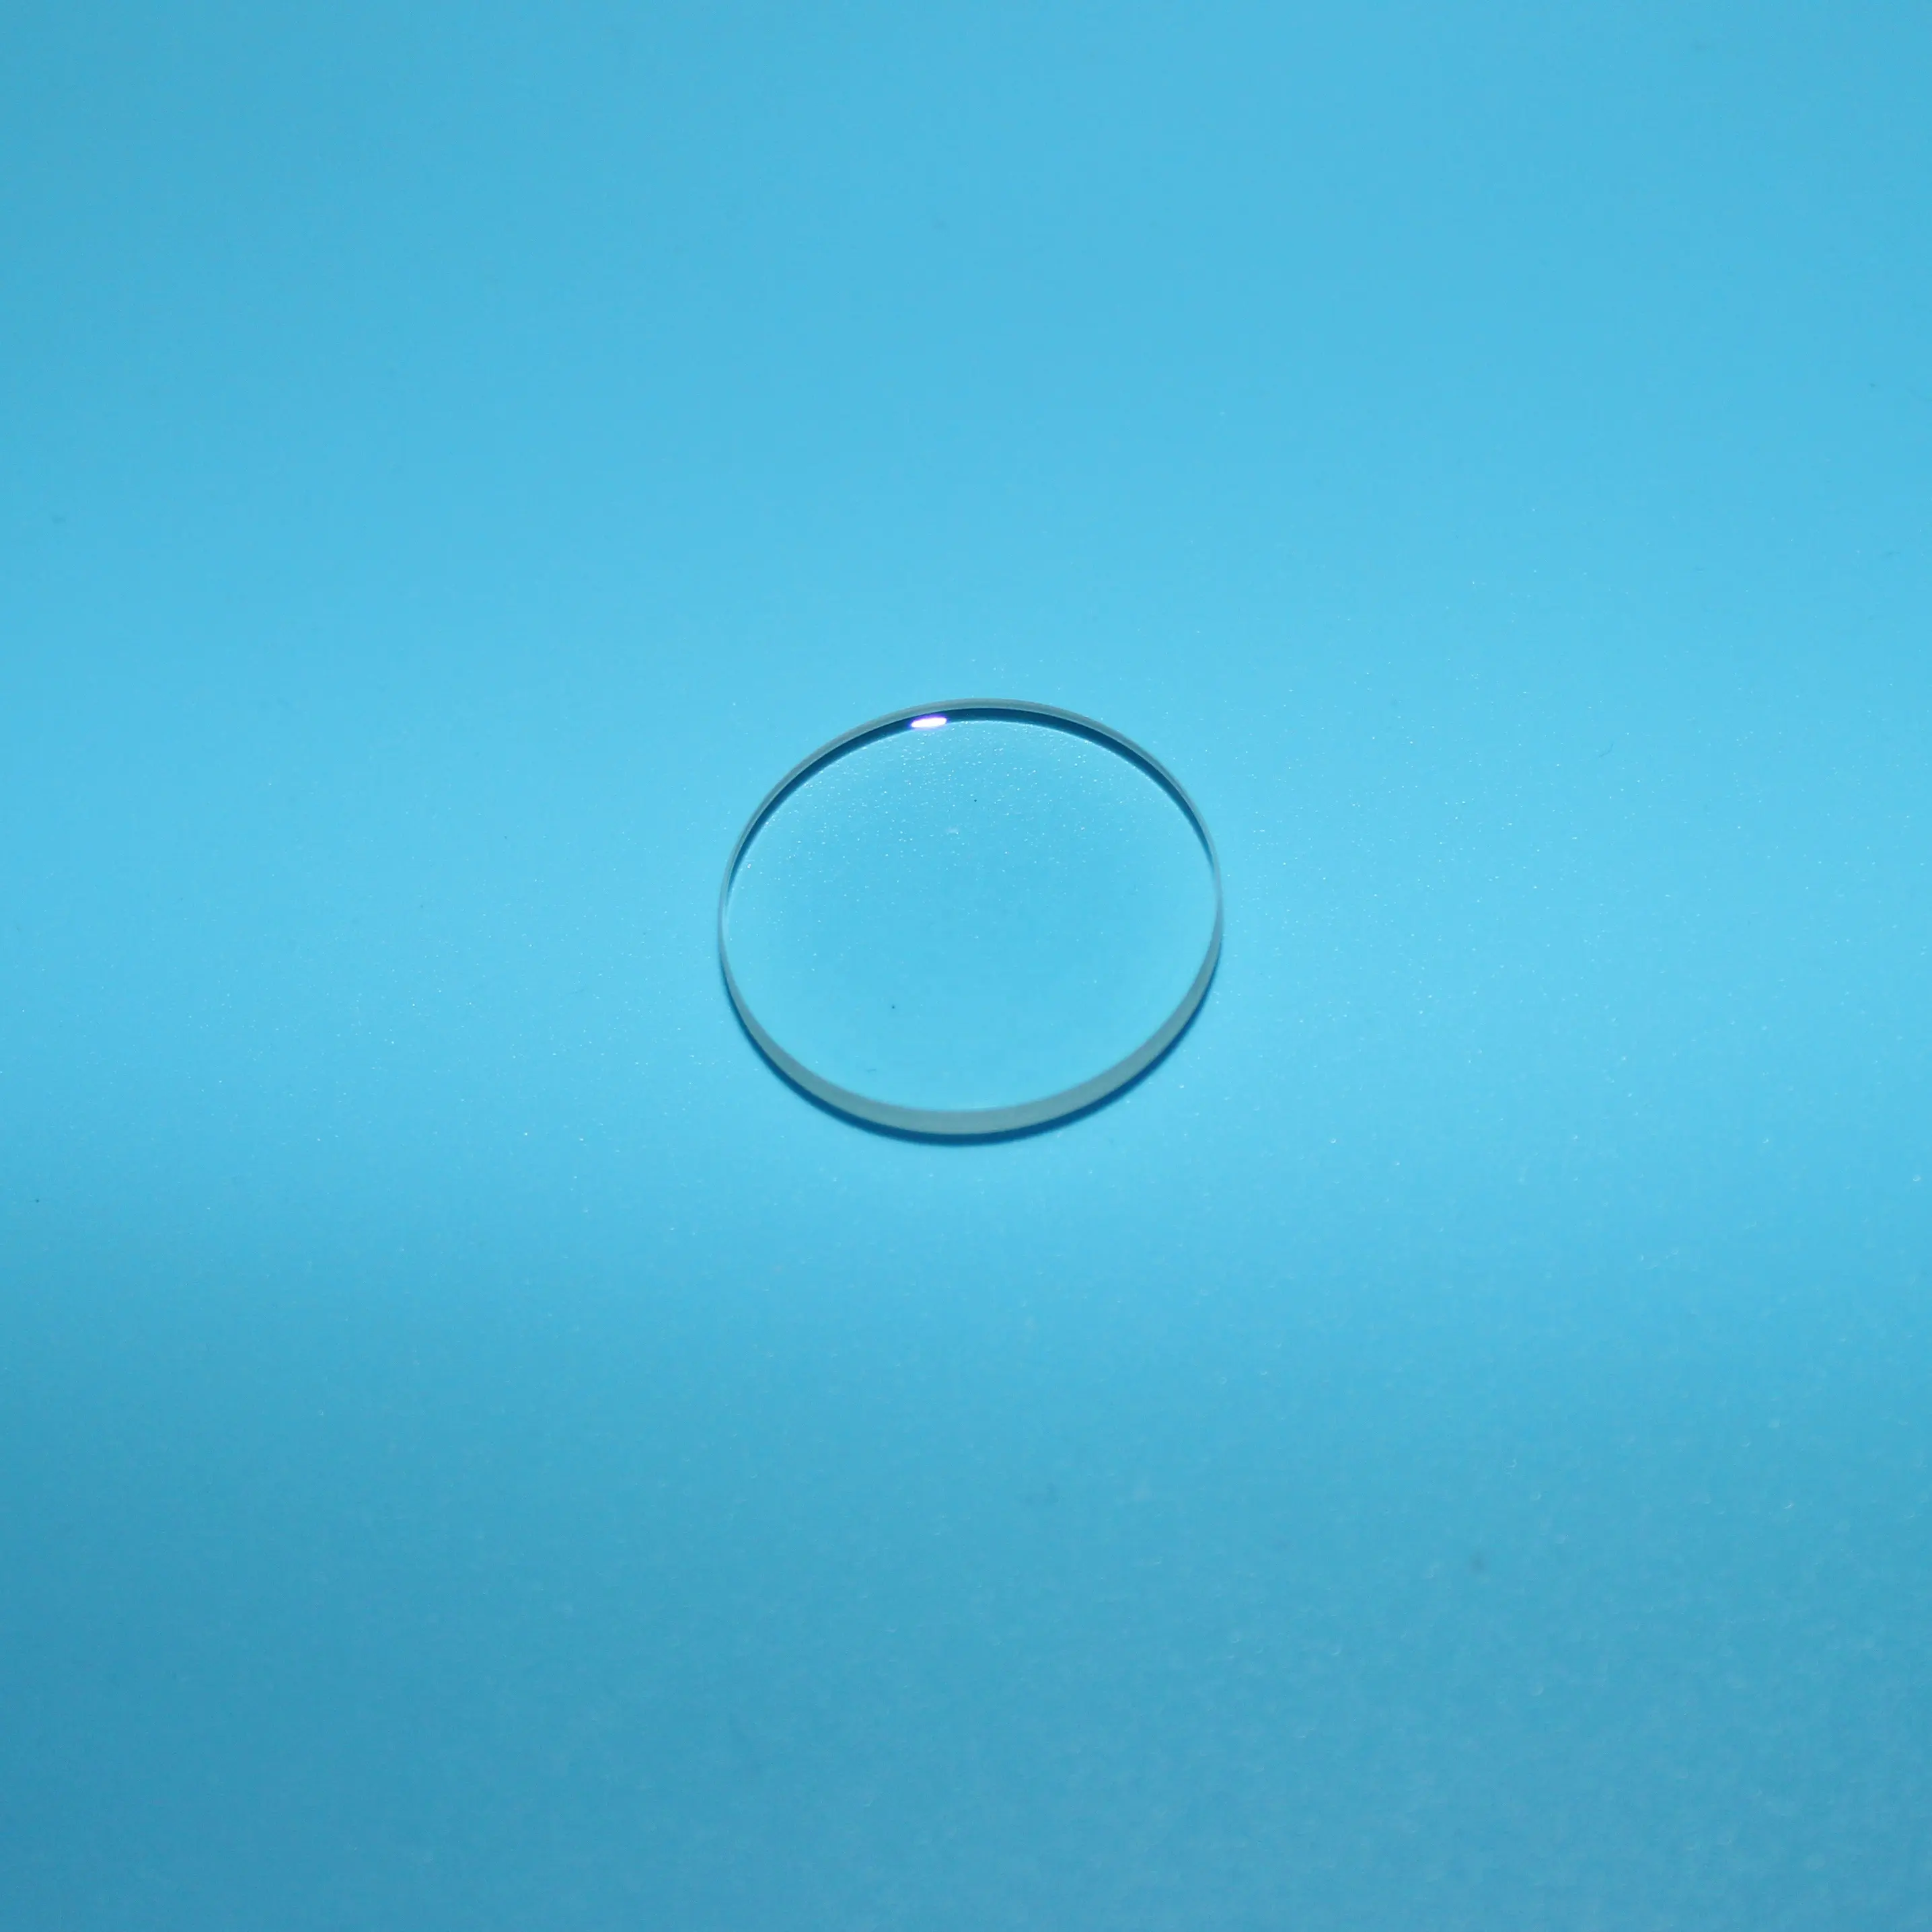 High quality  plano convex lens diameter 20mm 3X magnifying glass lens